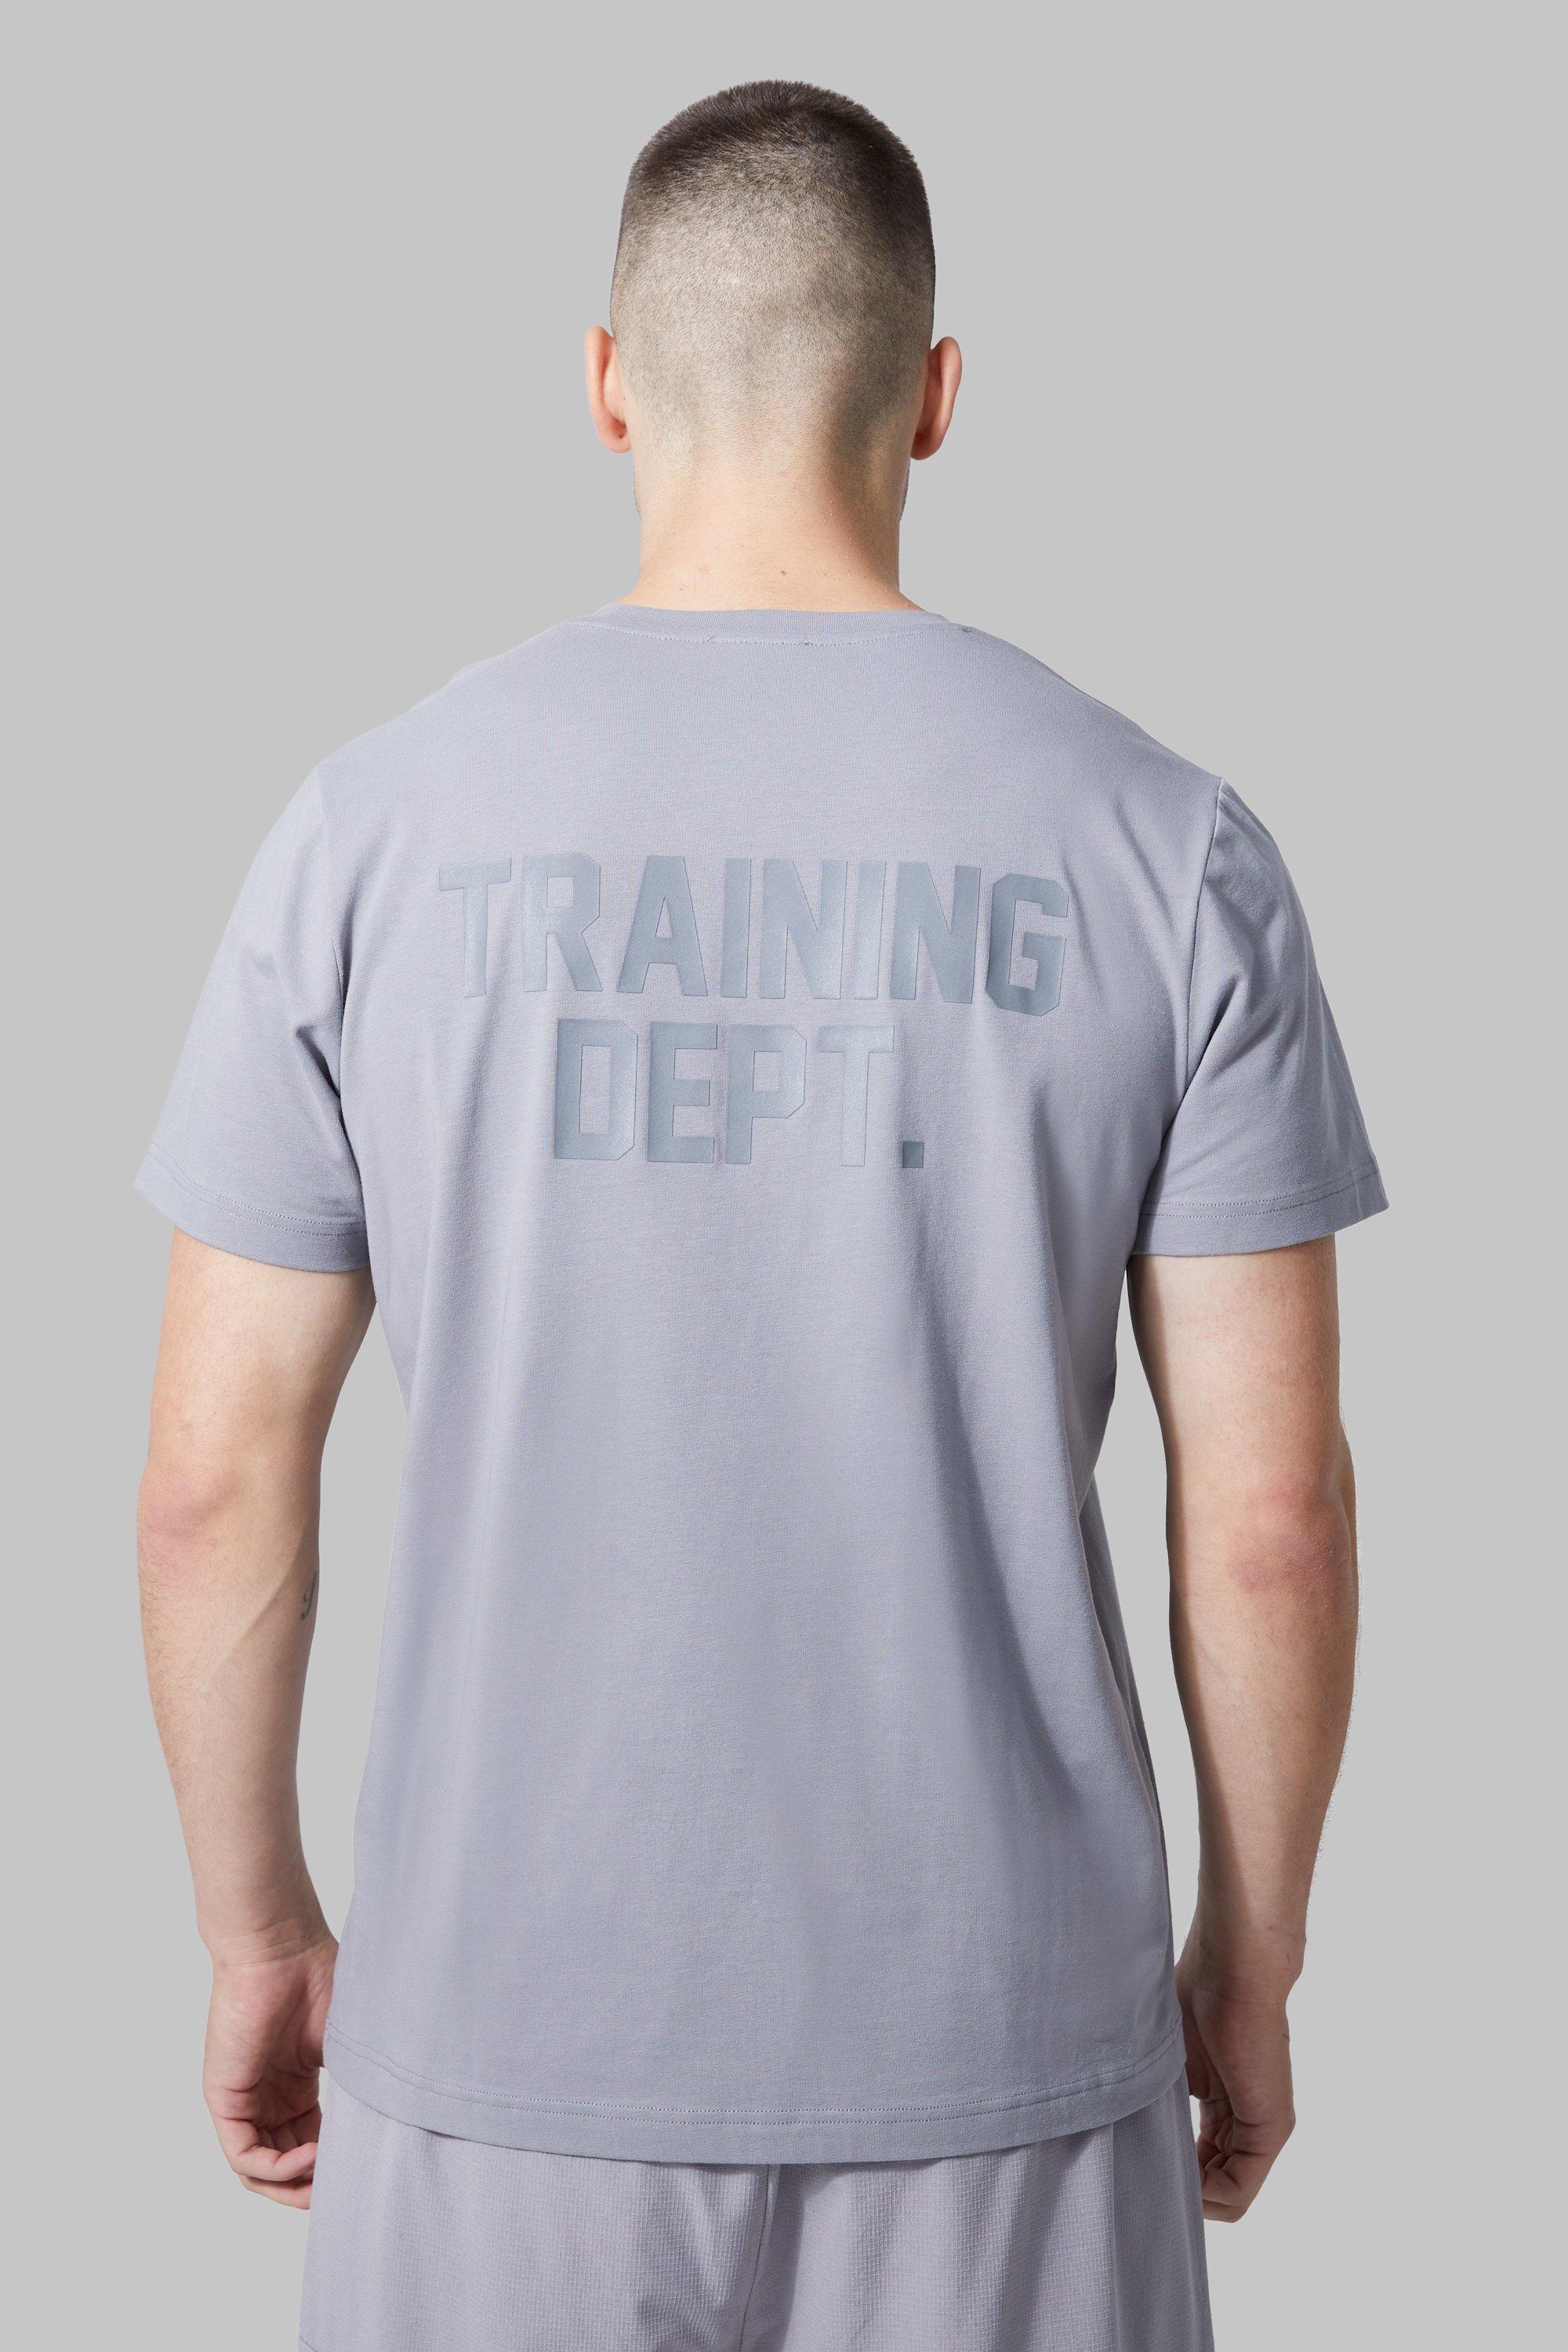 Mens Light Grey Tall Active Training Dept Performance Slim T-shirt